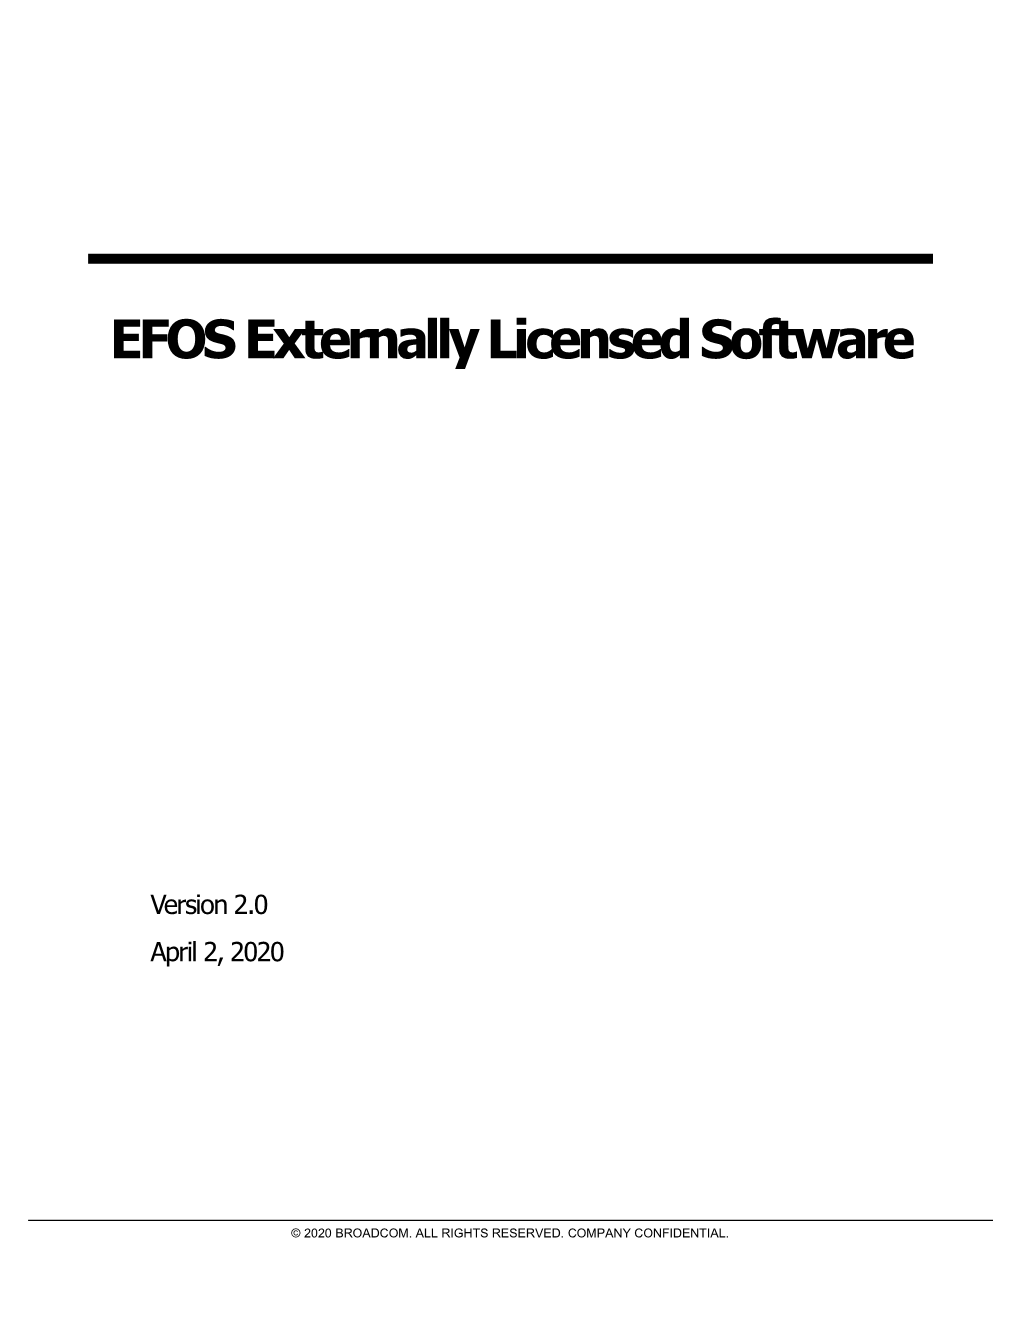 EFOS Externally Licensed Software